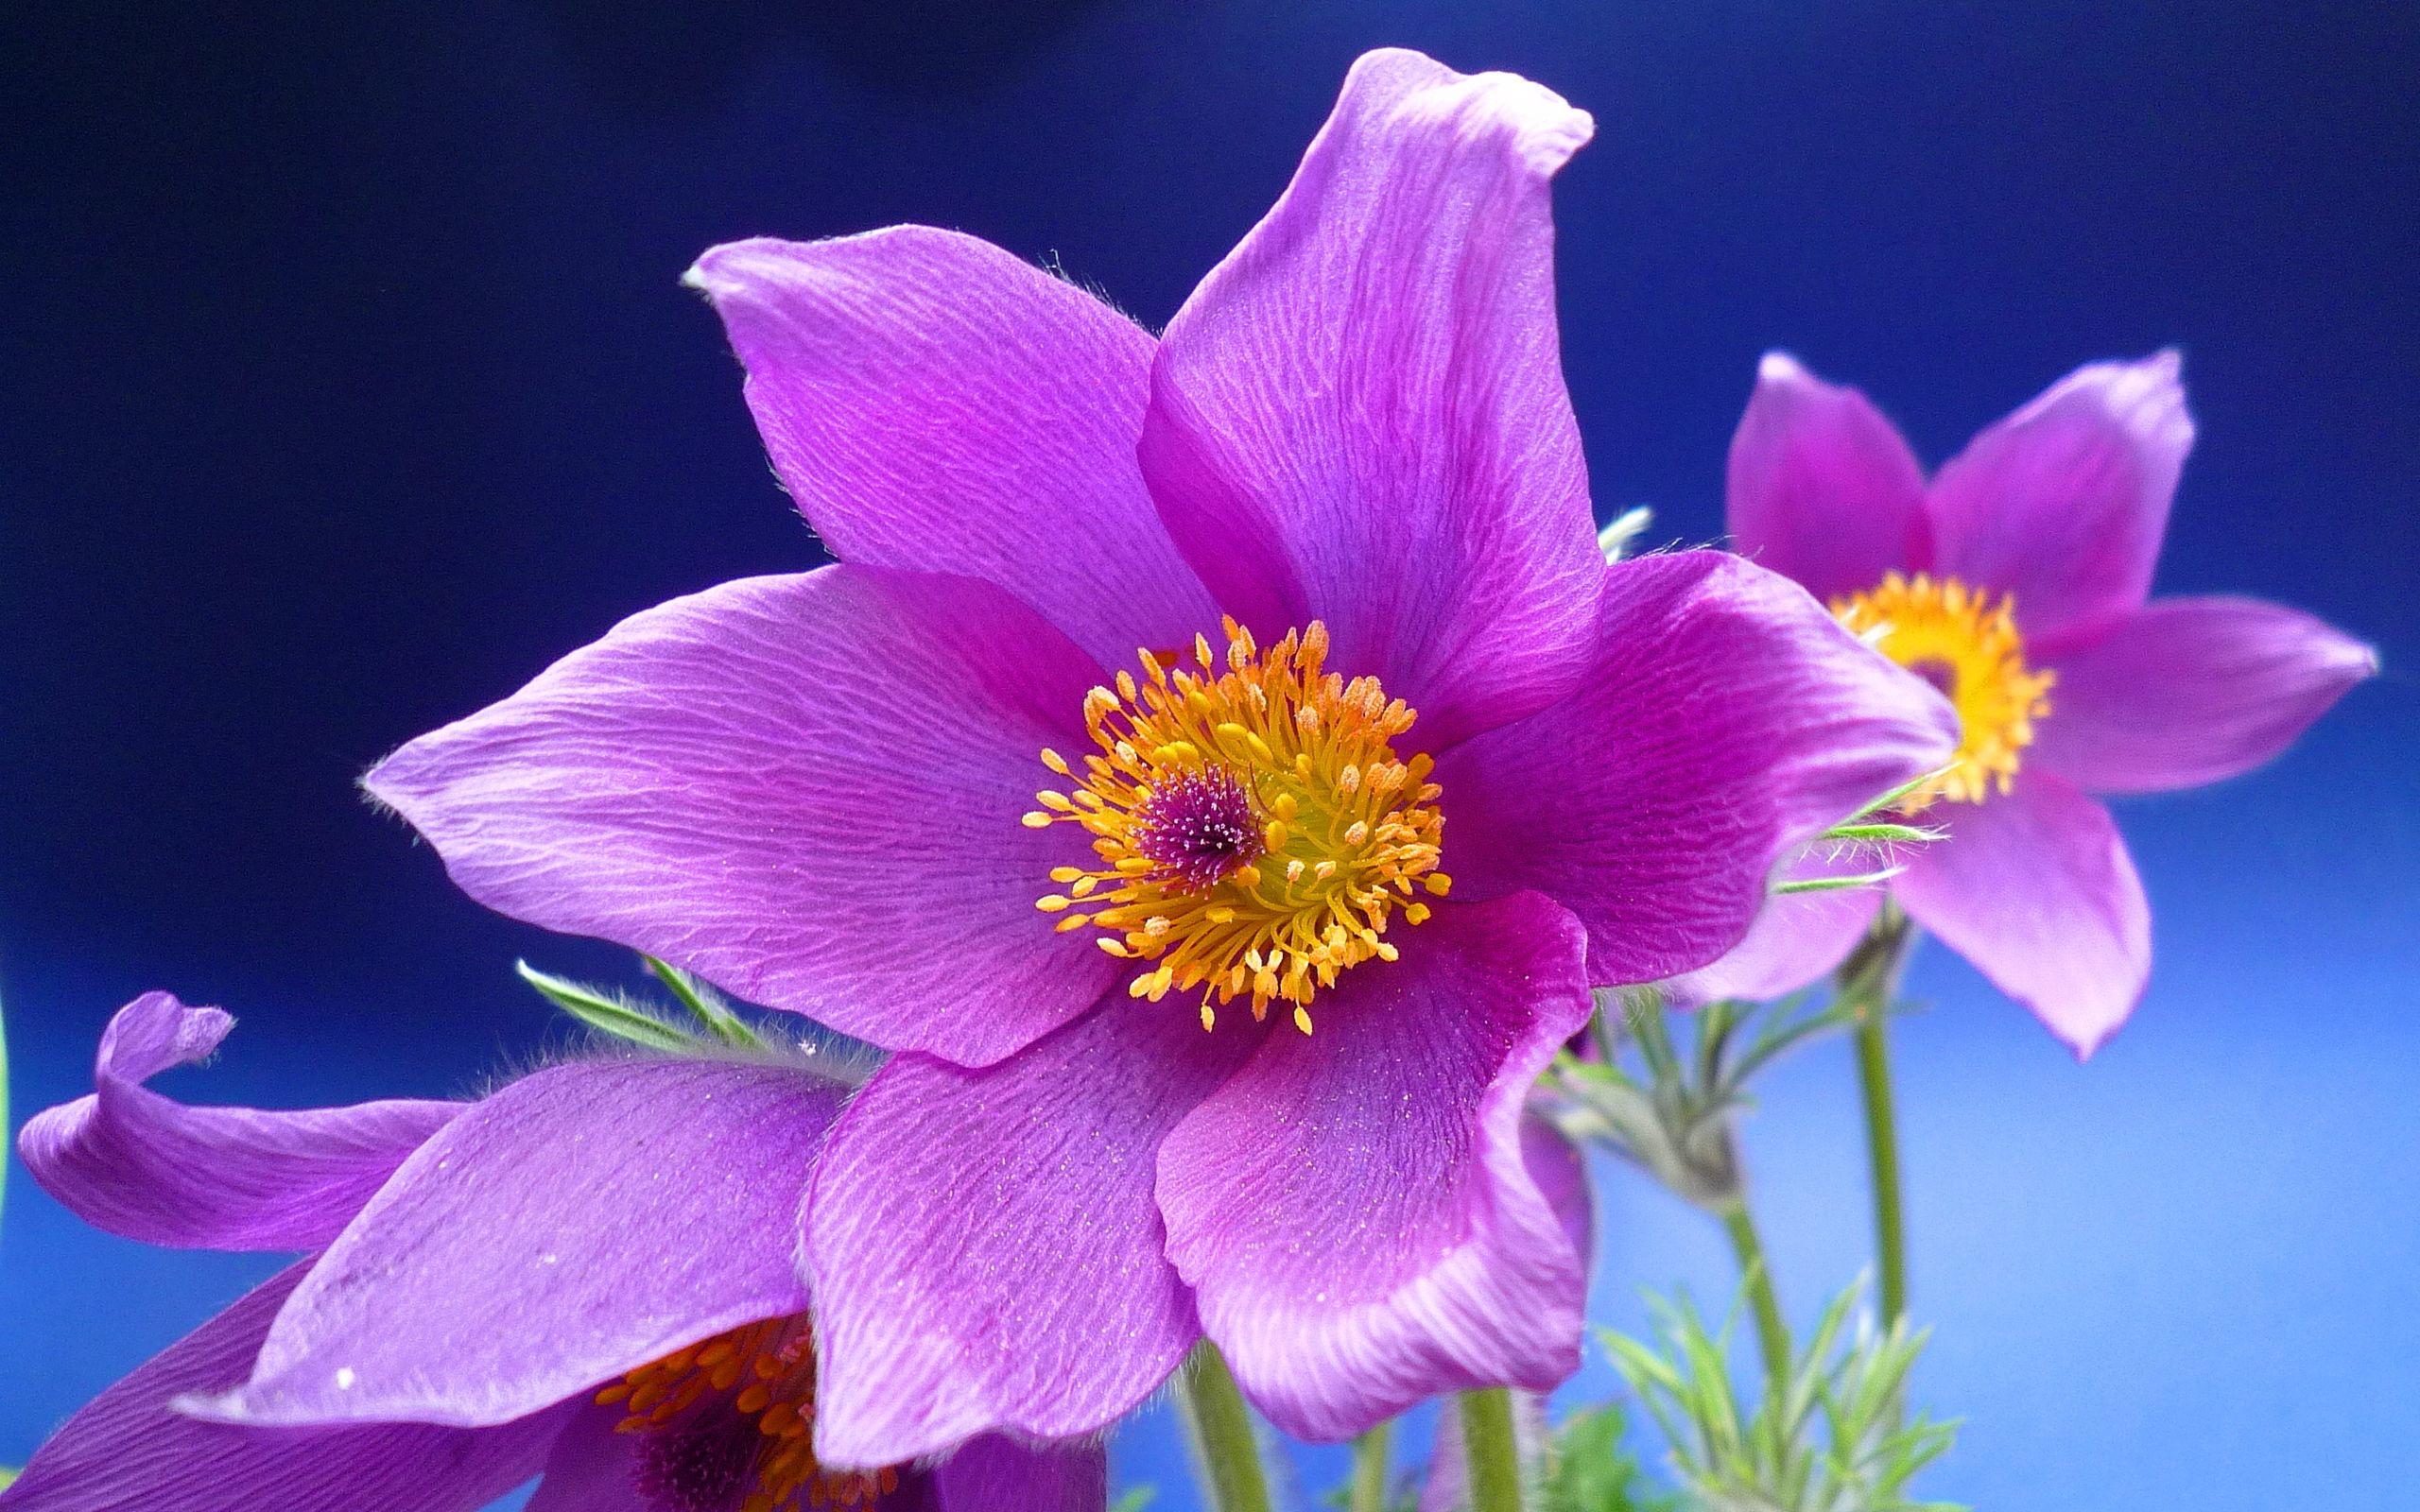 Pink Anemone Flower 26025 2560x1600 px